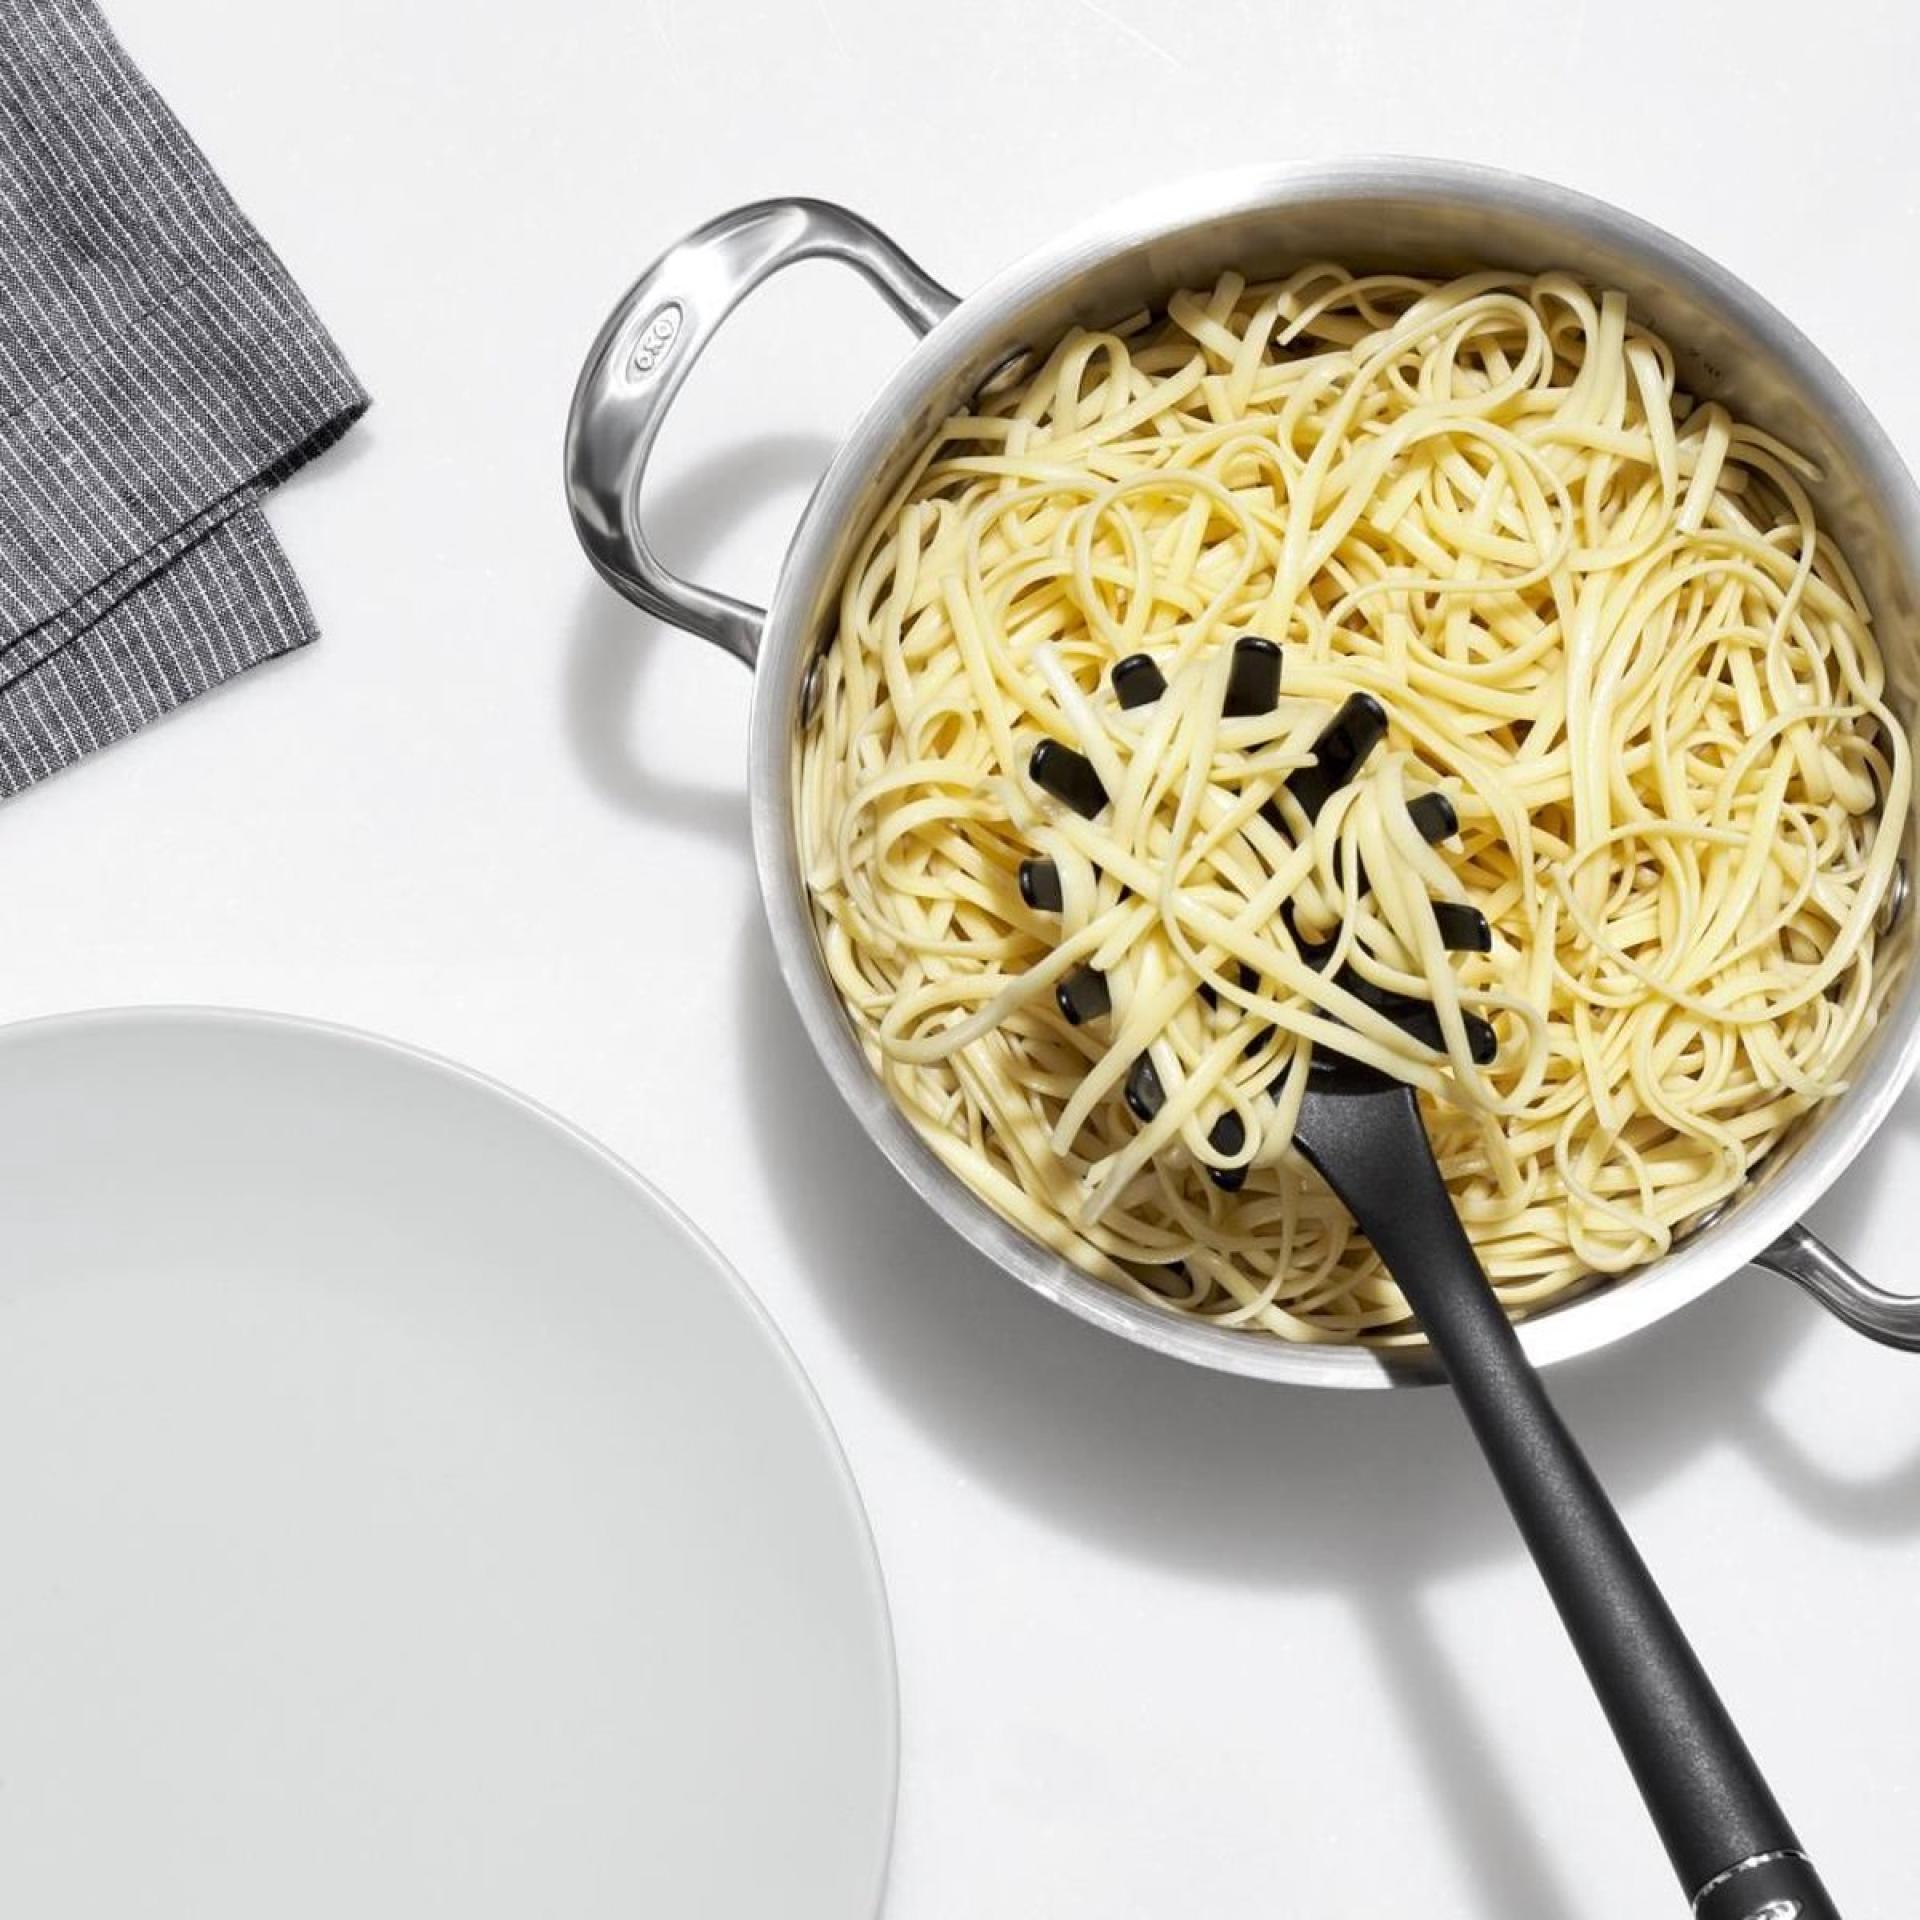 Spaghettilepel met extra grip van oxo met spaghetti